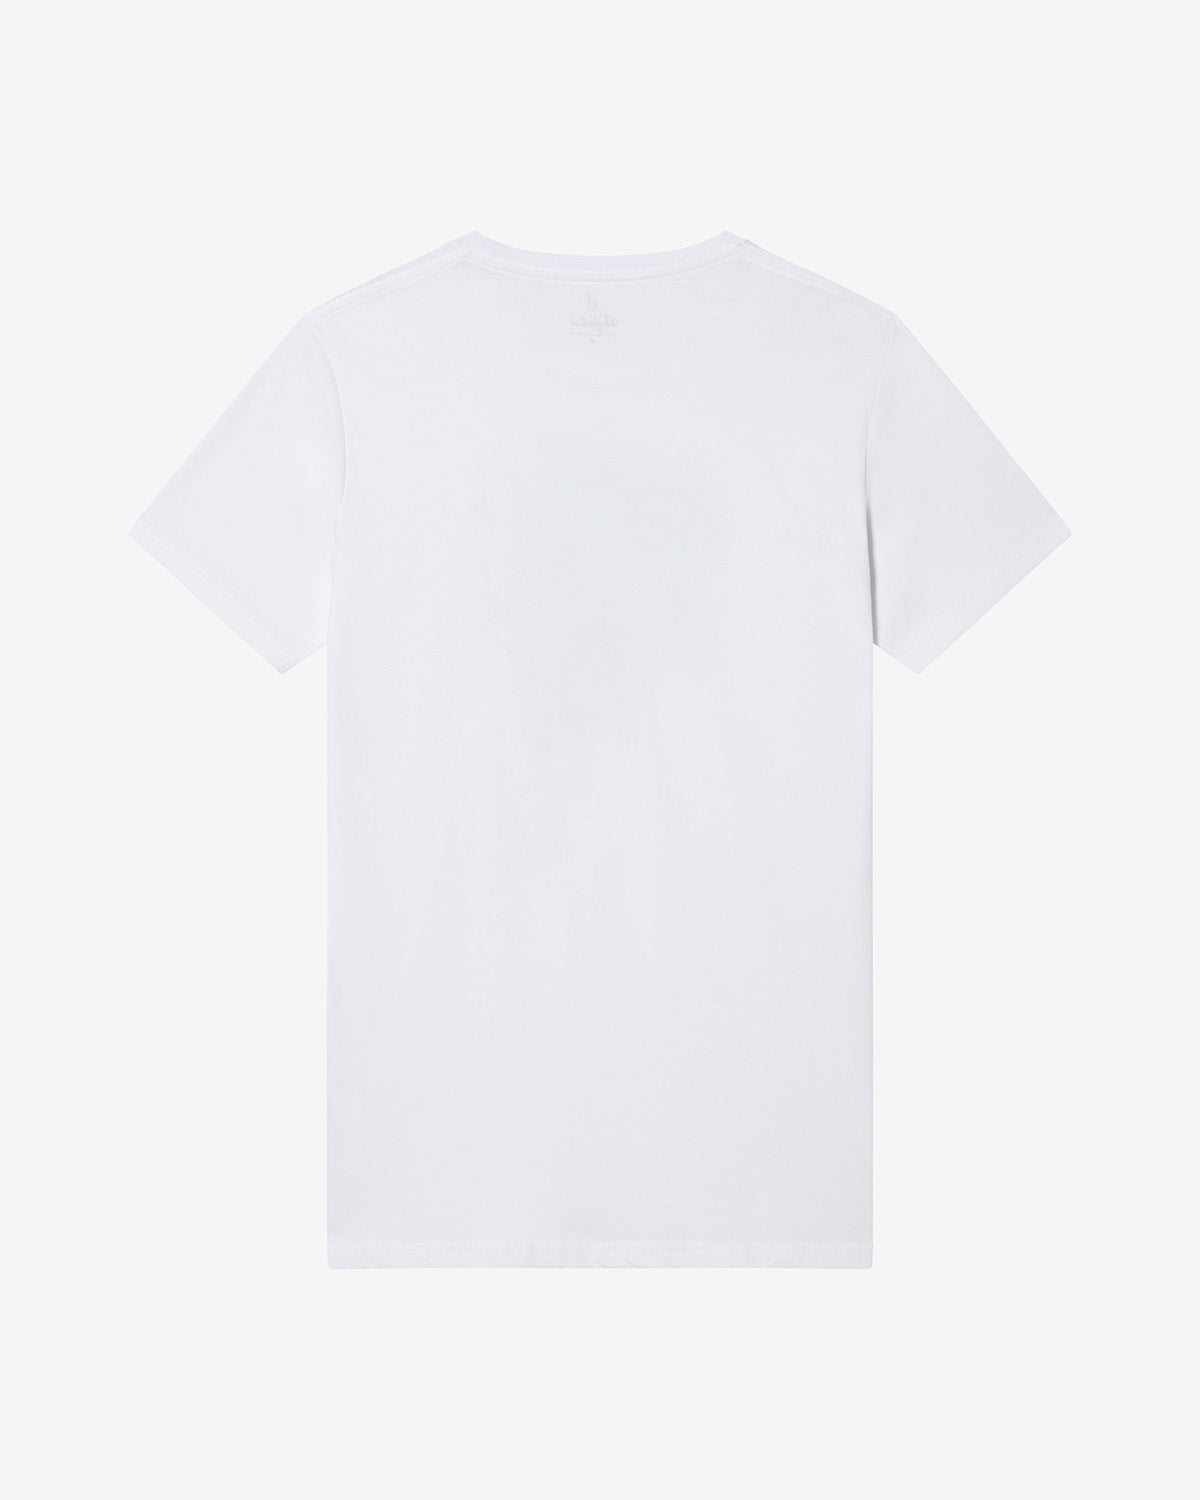 PM T-Shirt: Australian Padel